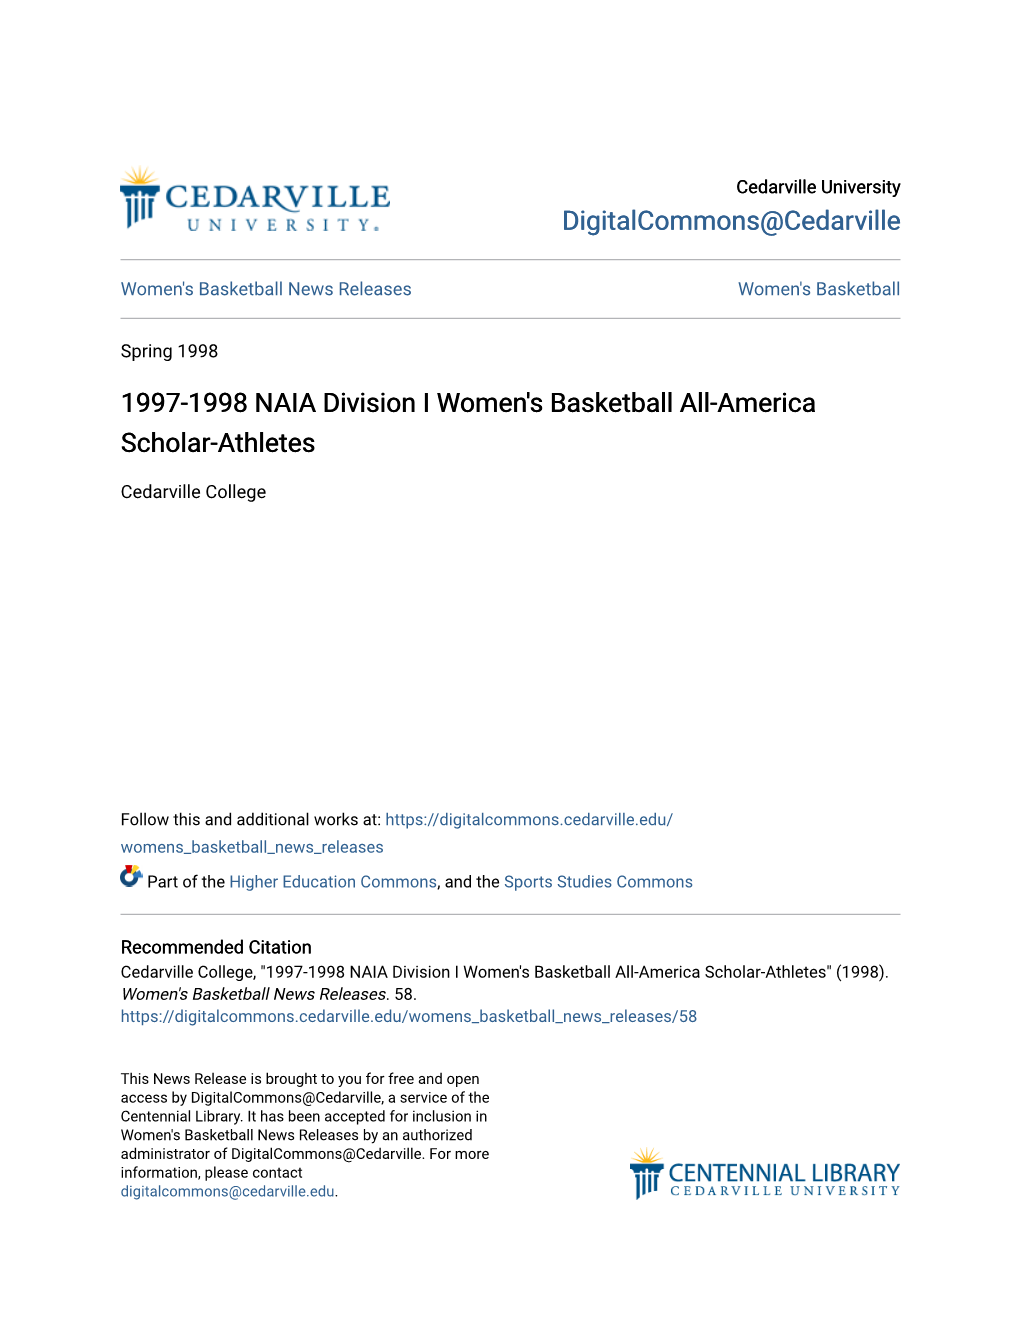 1997-1998 NAIA Division I Women's Basketball All-America Scholar-Athletes